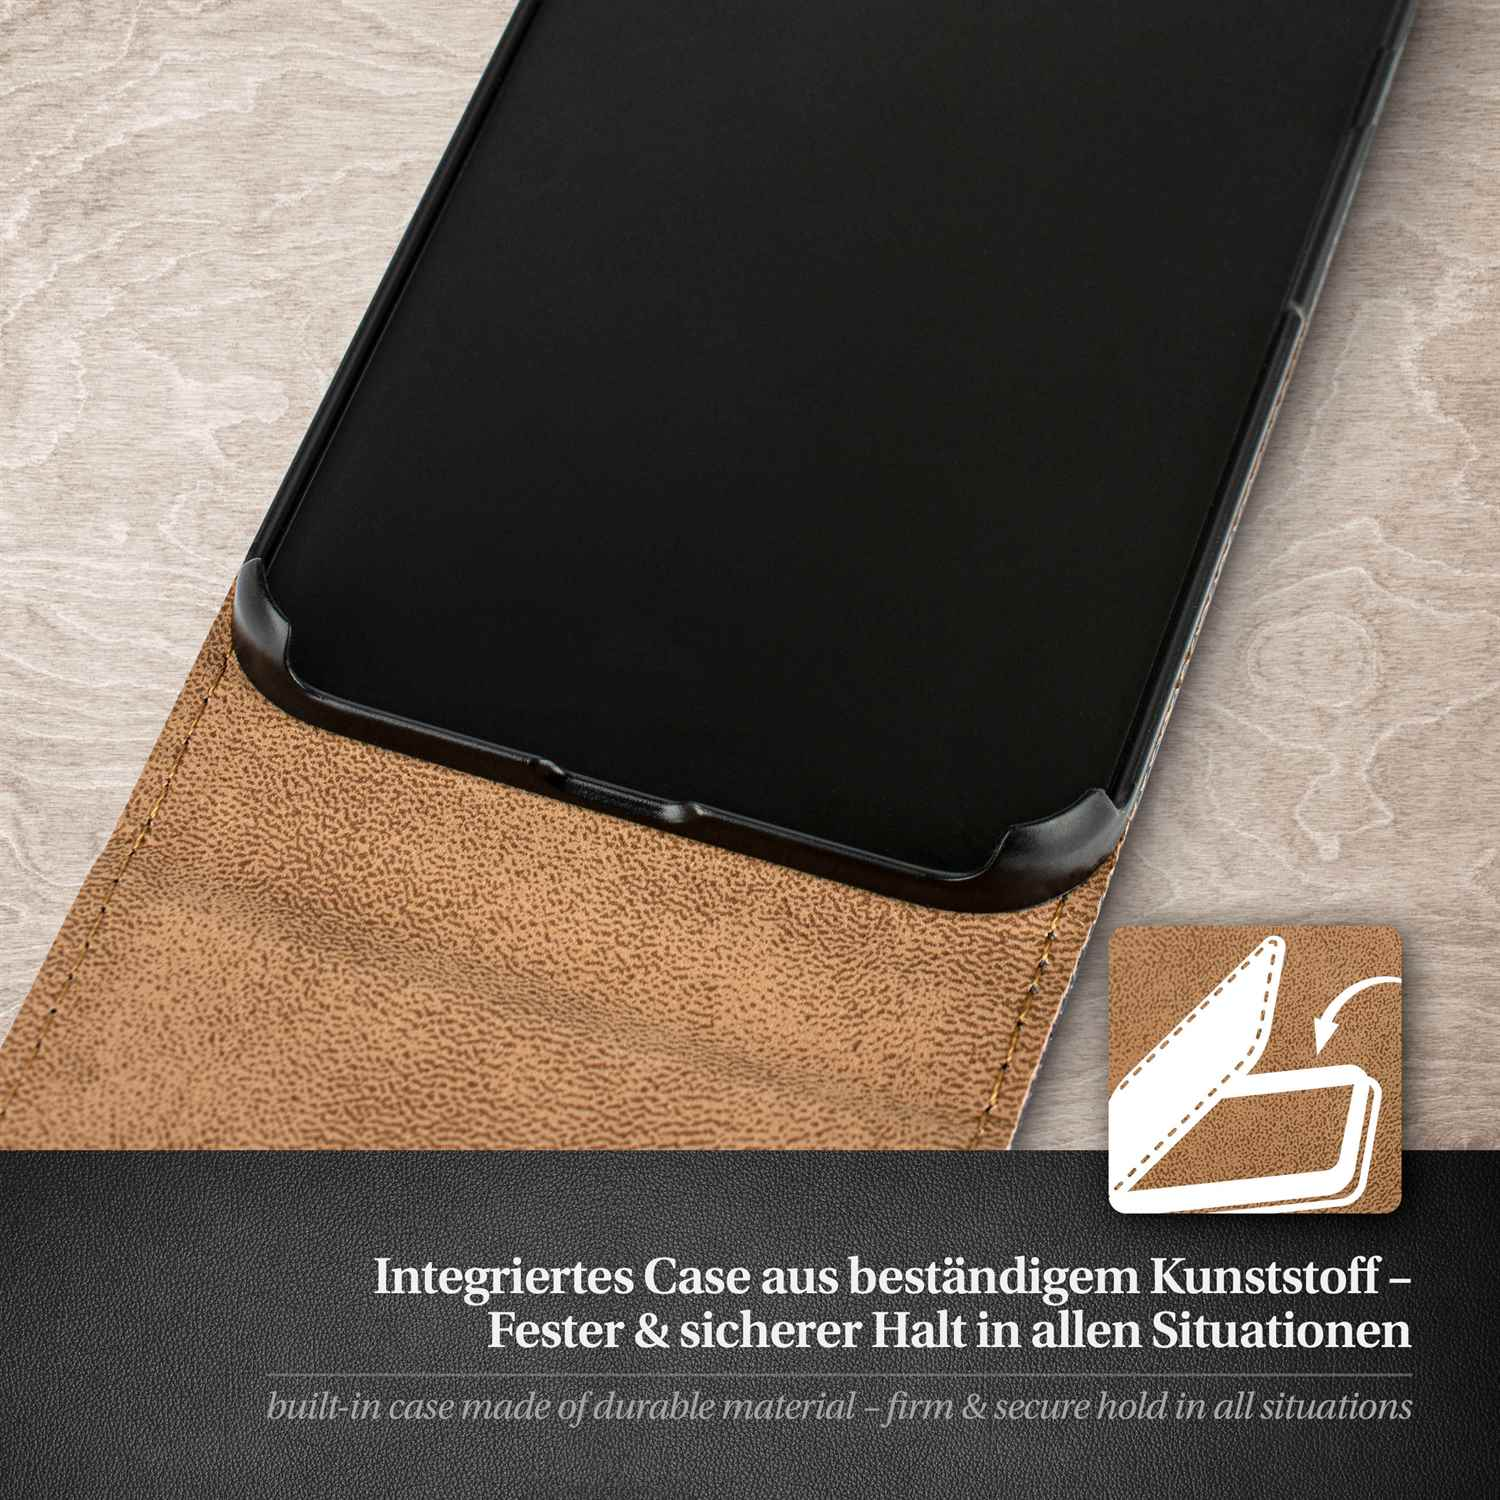 MOEX Flip Case, G610, Ascend Huawei, Deep-Black Flip Cover